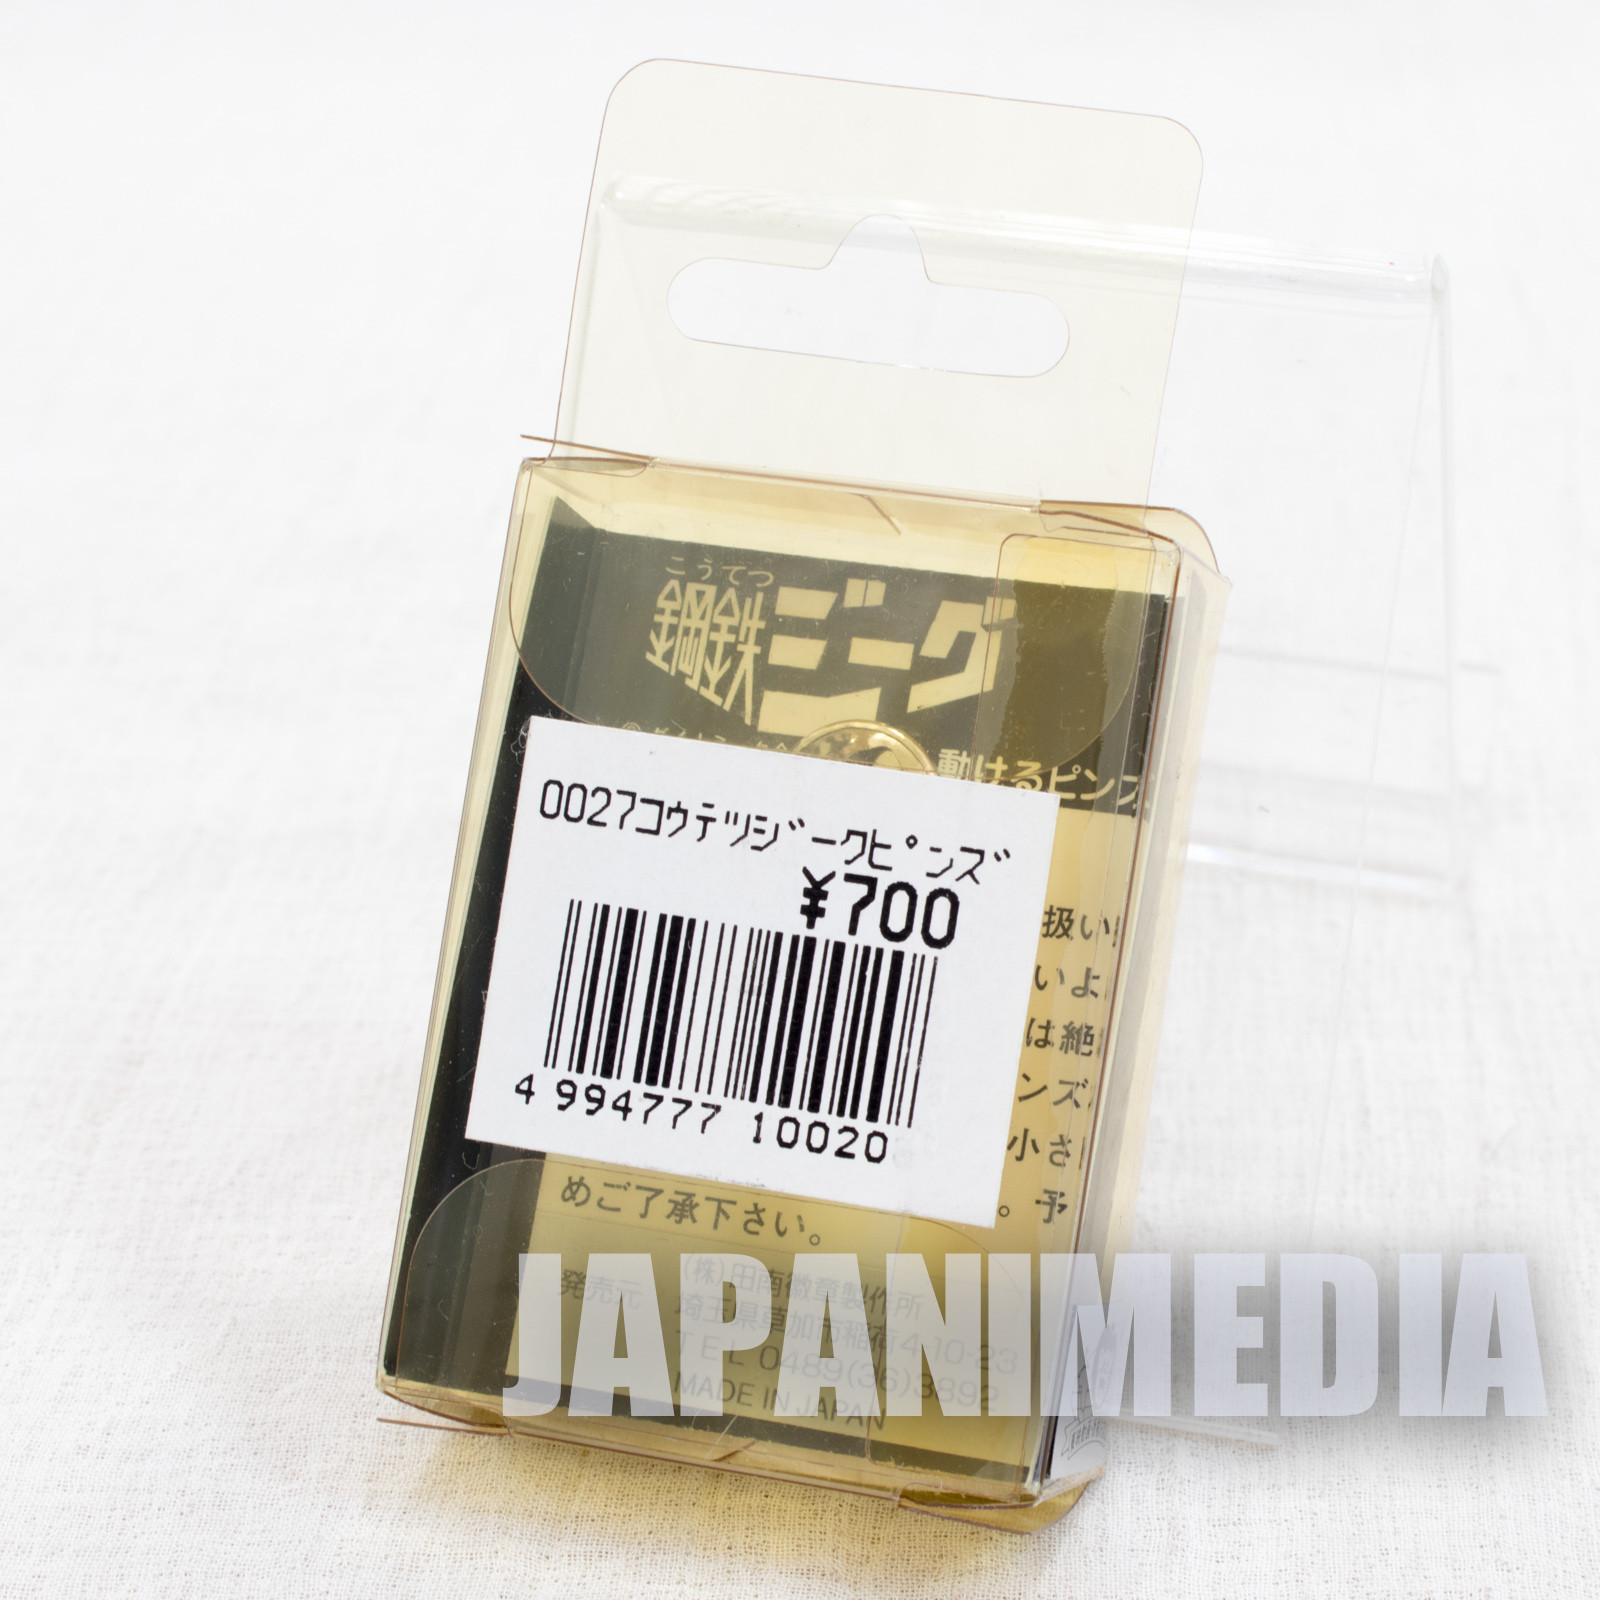 Retro Rare! Steel Jeeg Action Pins JAPAN ANIME MANGA